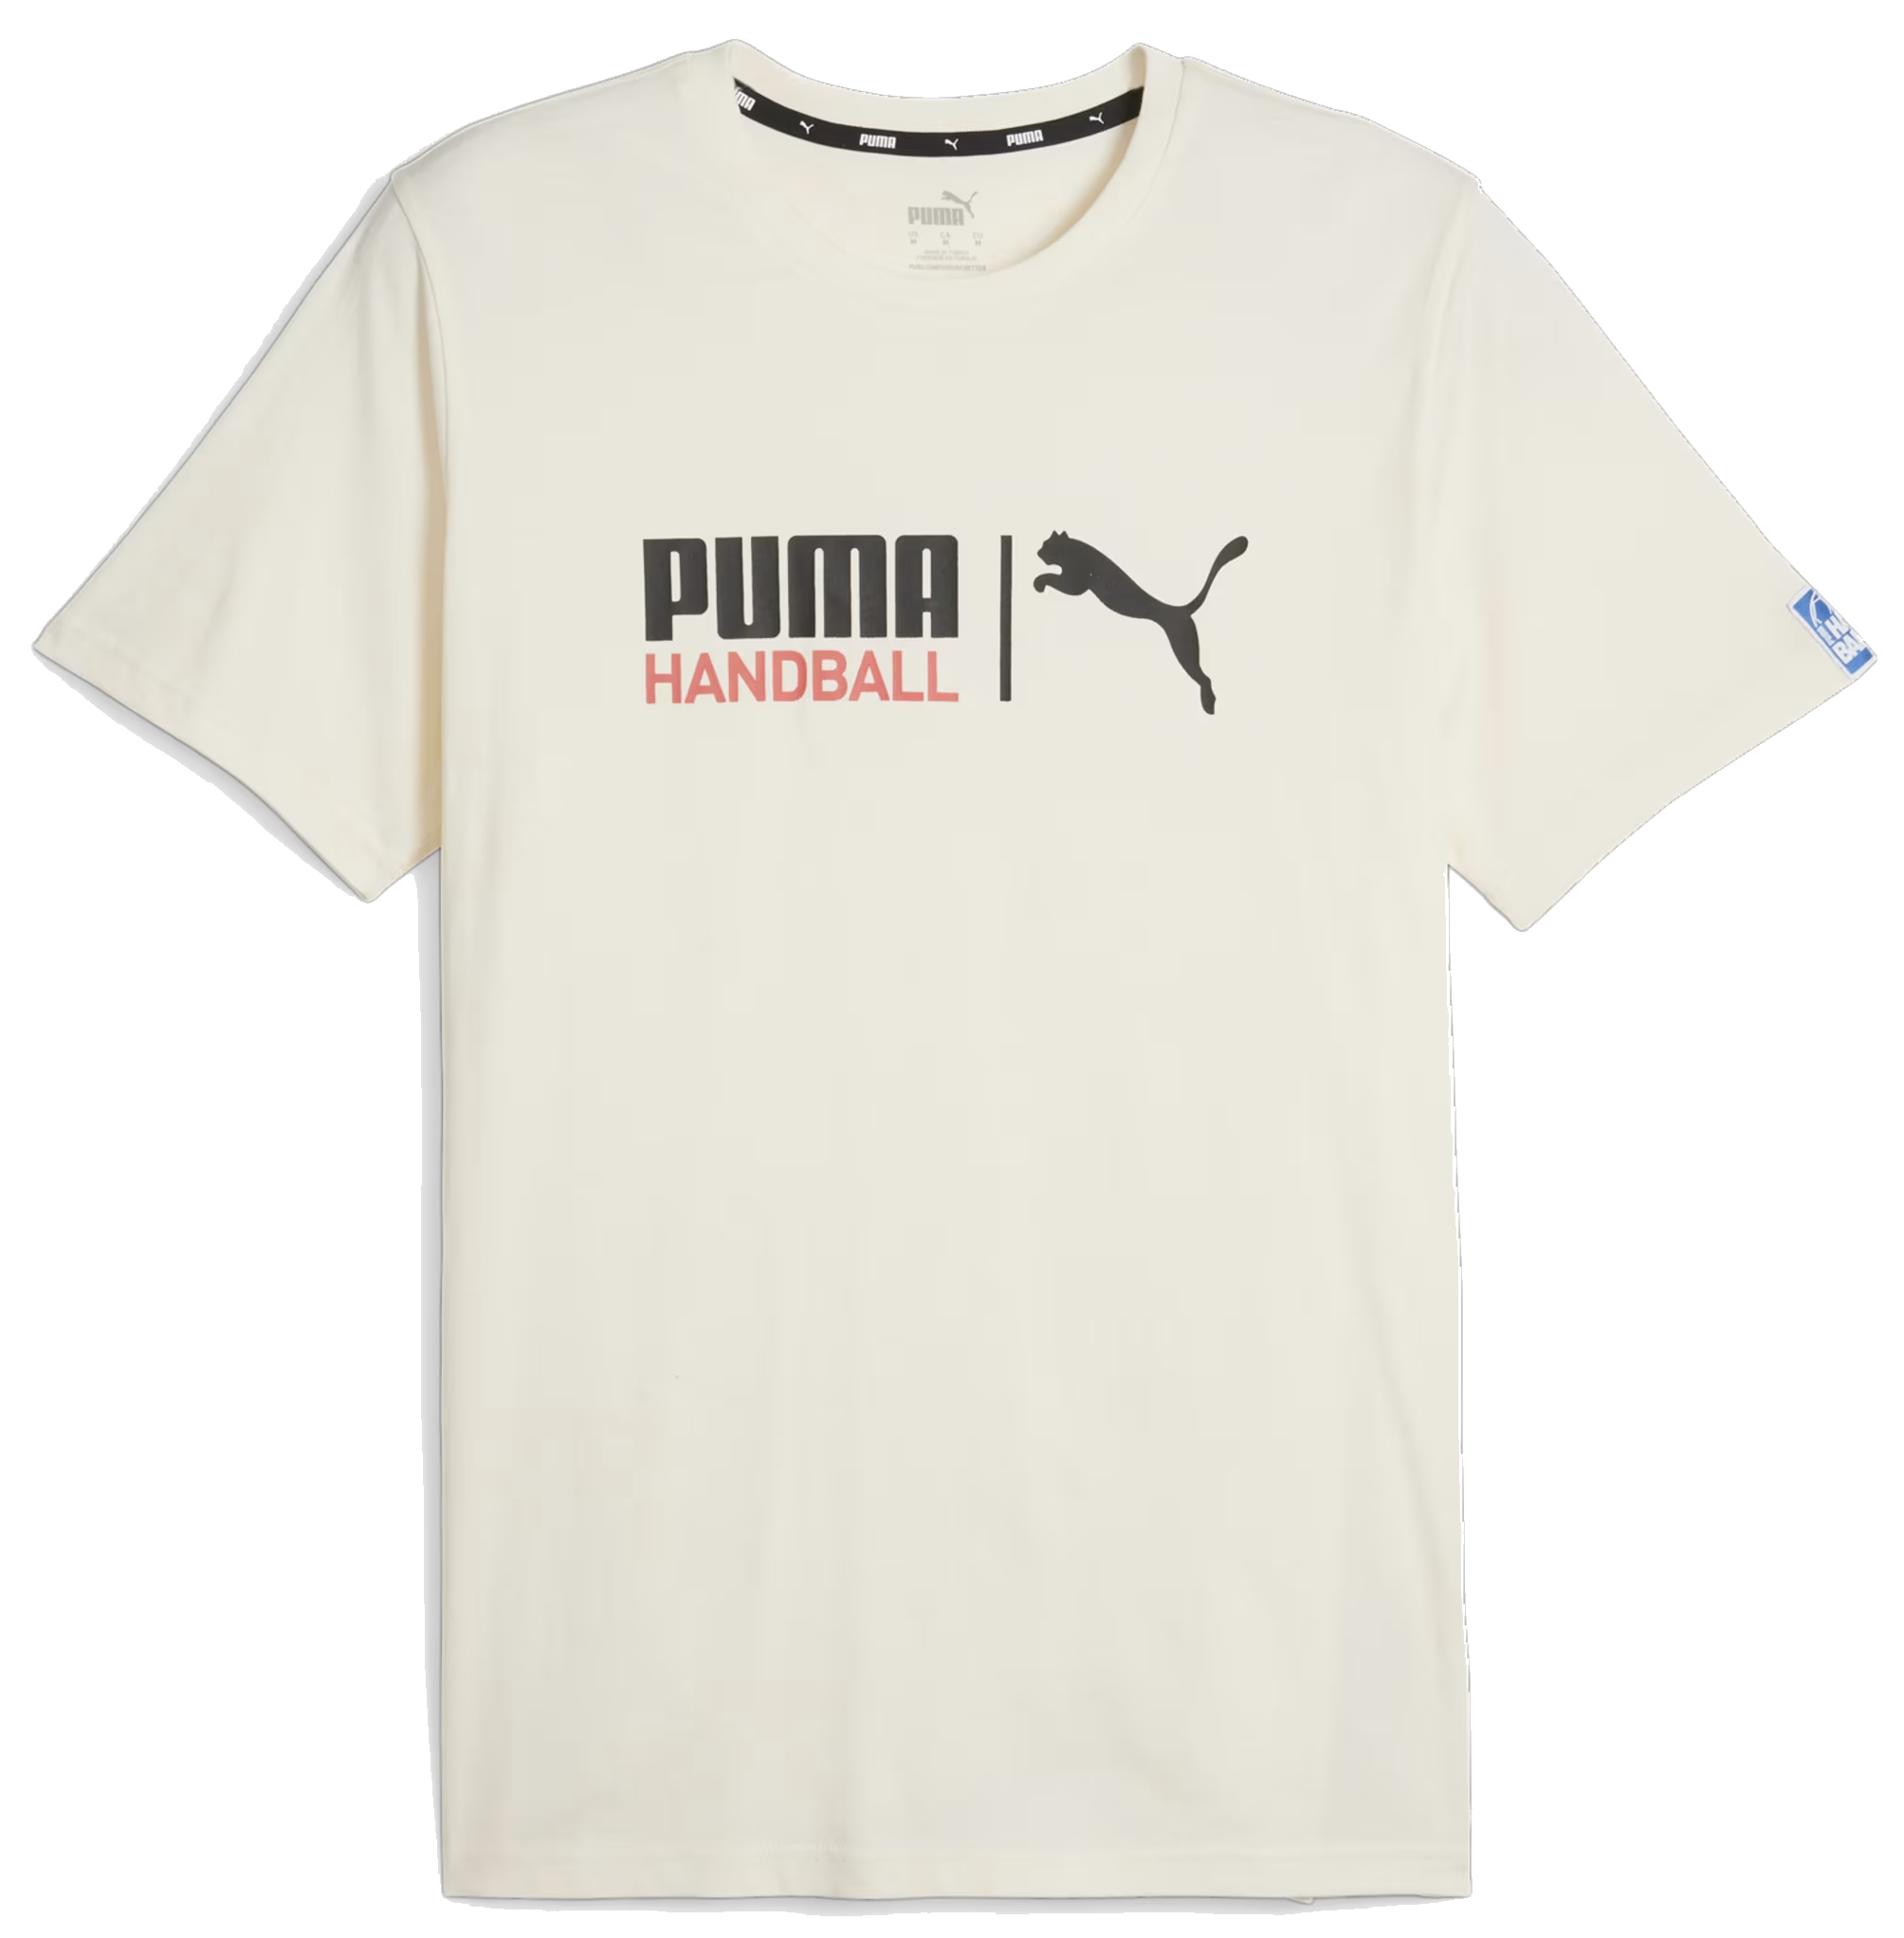 Tričko Puma Handball